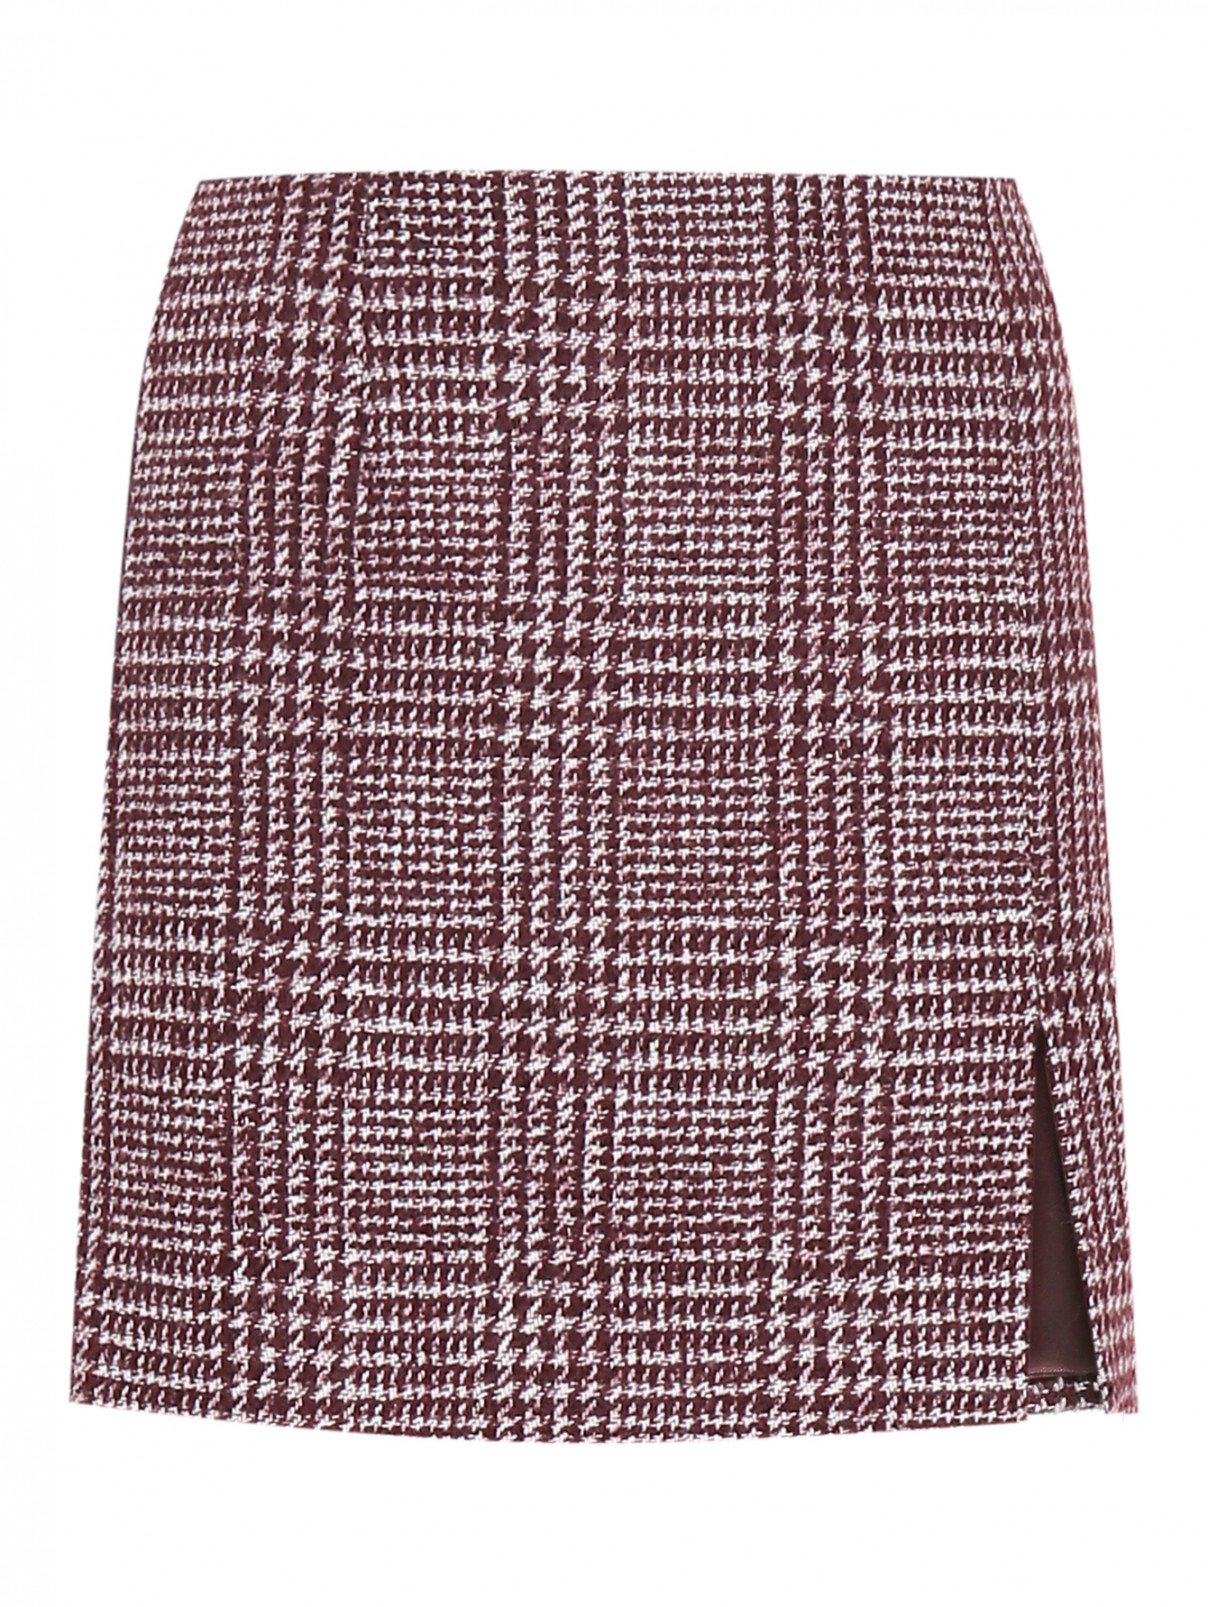 Мини-юбка с разрезом Forte Dei Marmi Couture  –  Общий вид  – Цвет:  Узор